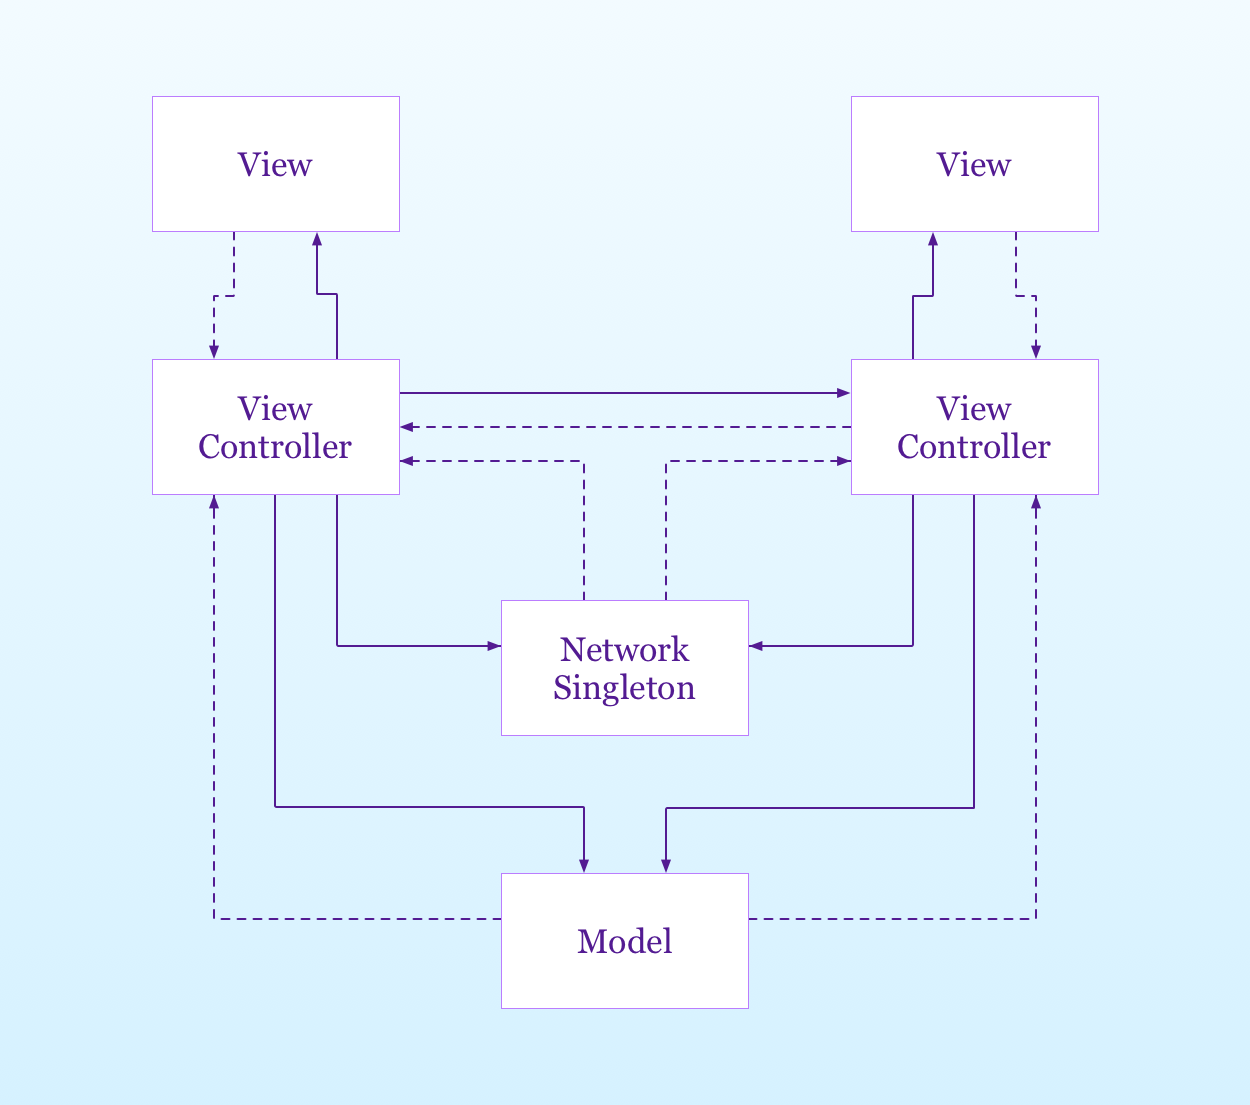 the network singleton in the MVC desing pattern